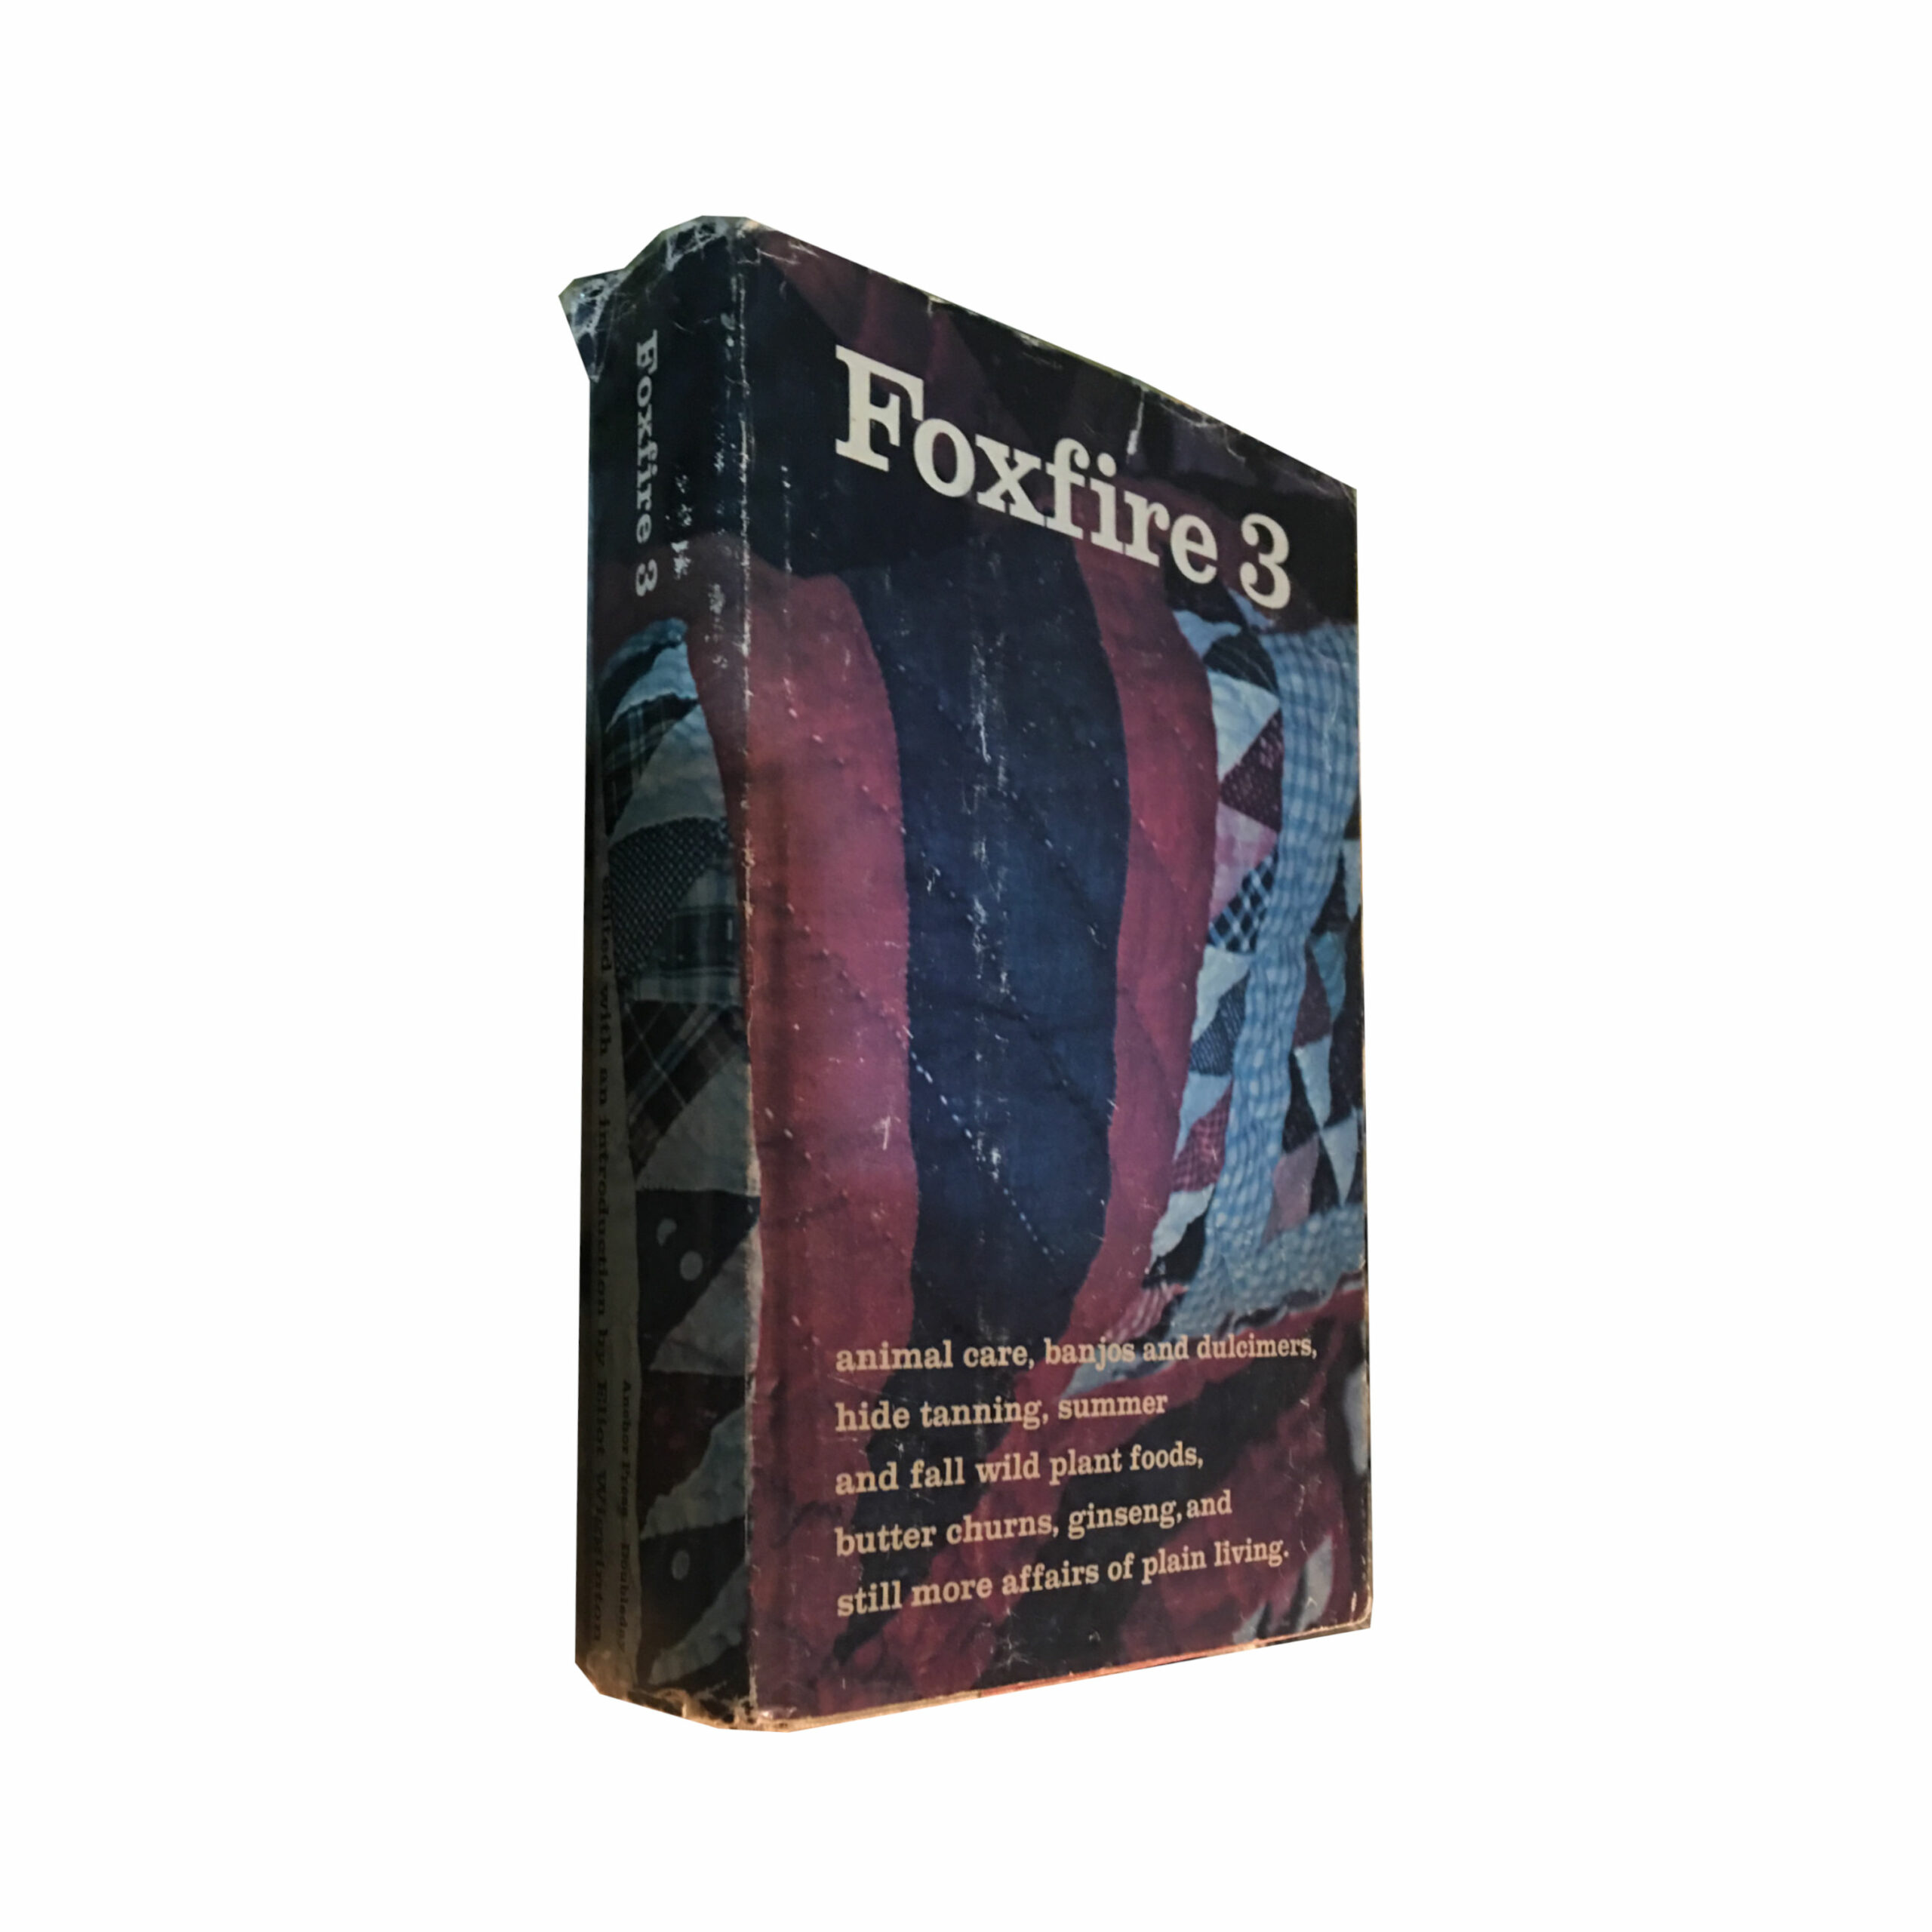 Foxfire 3 Book (1975)